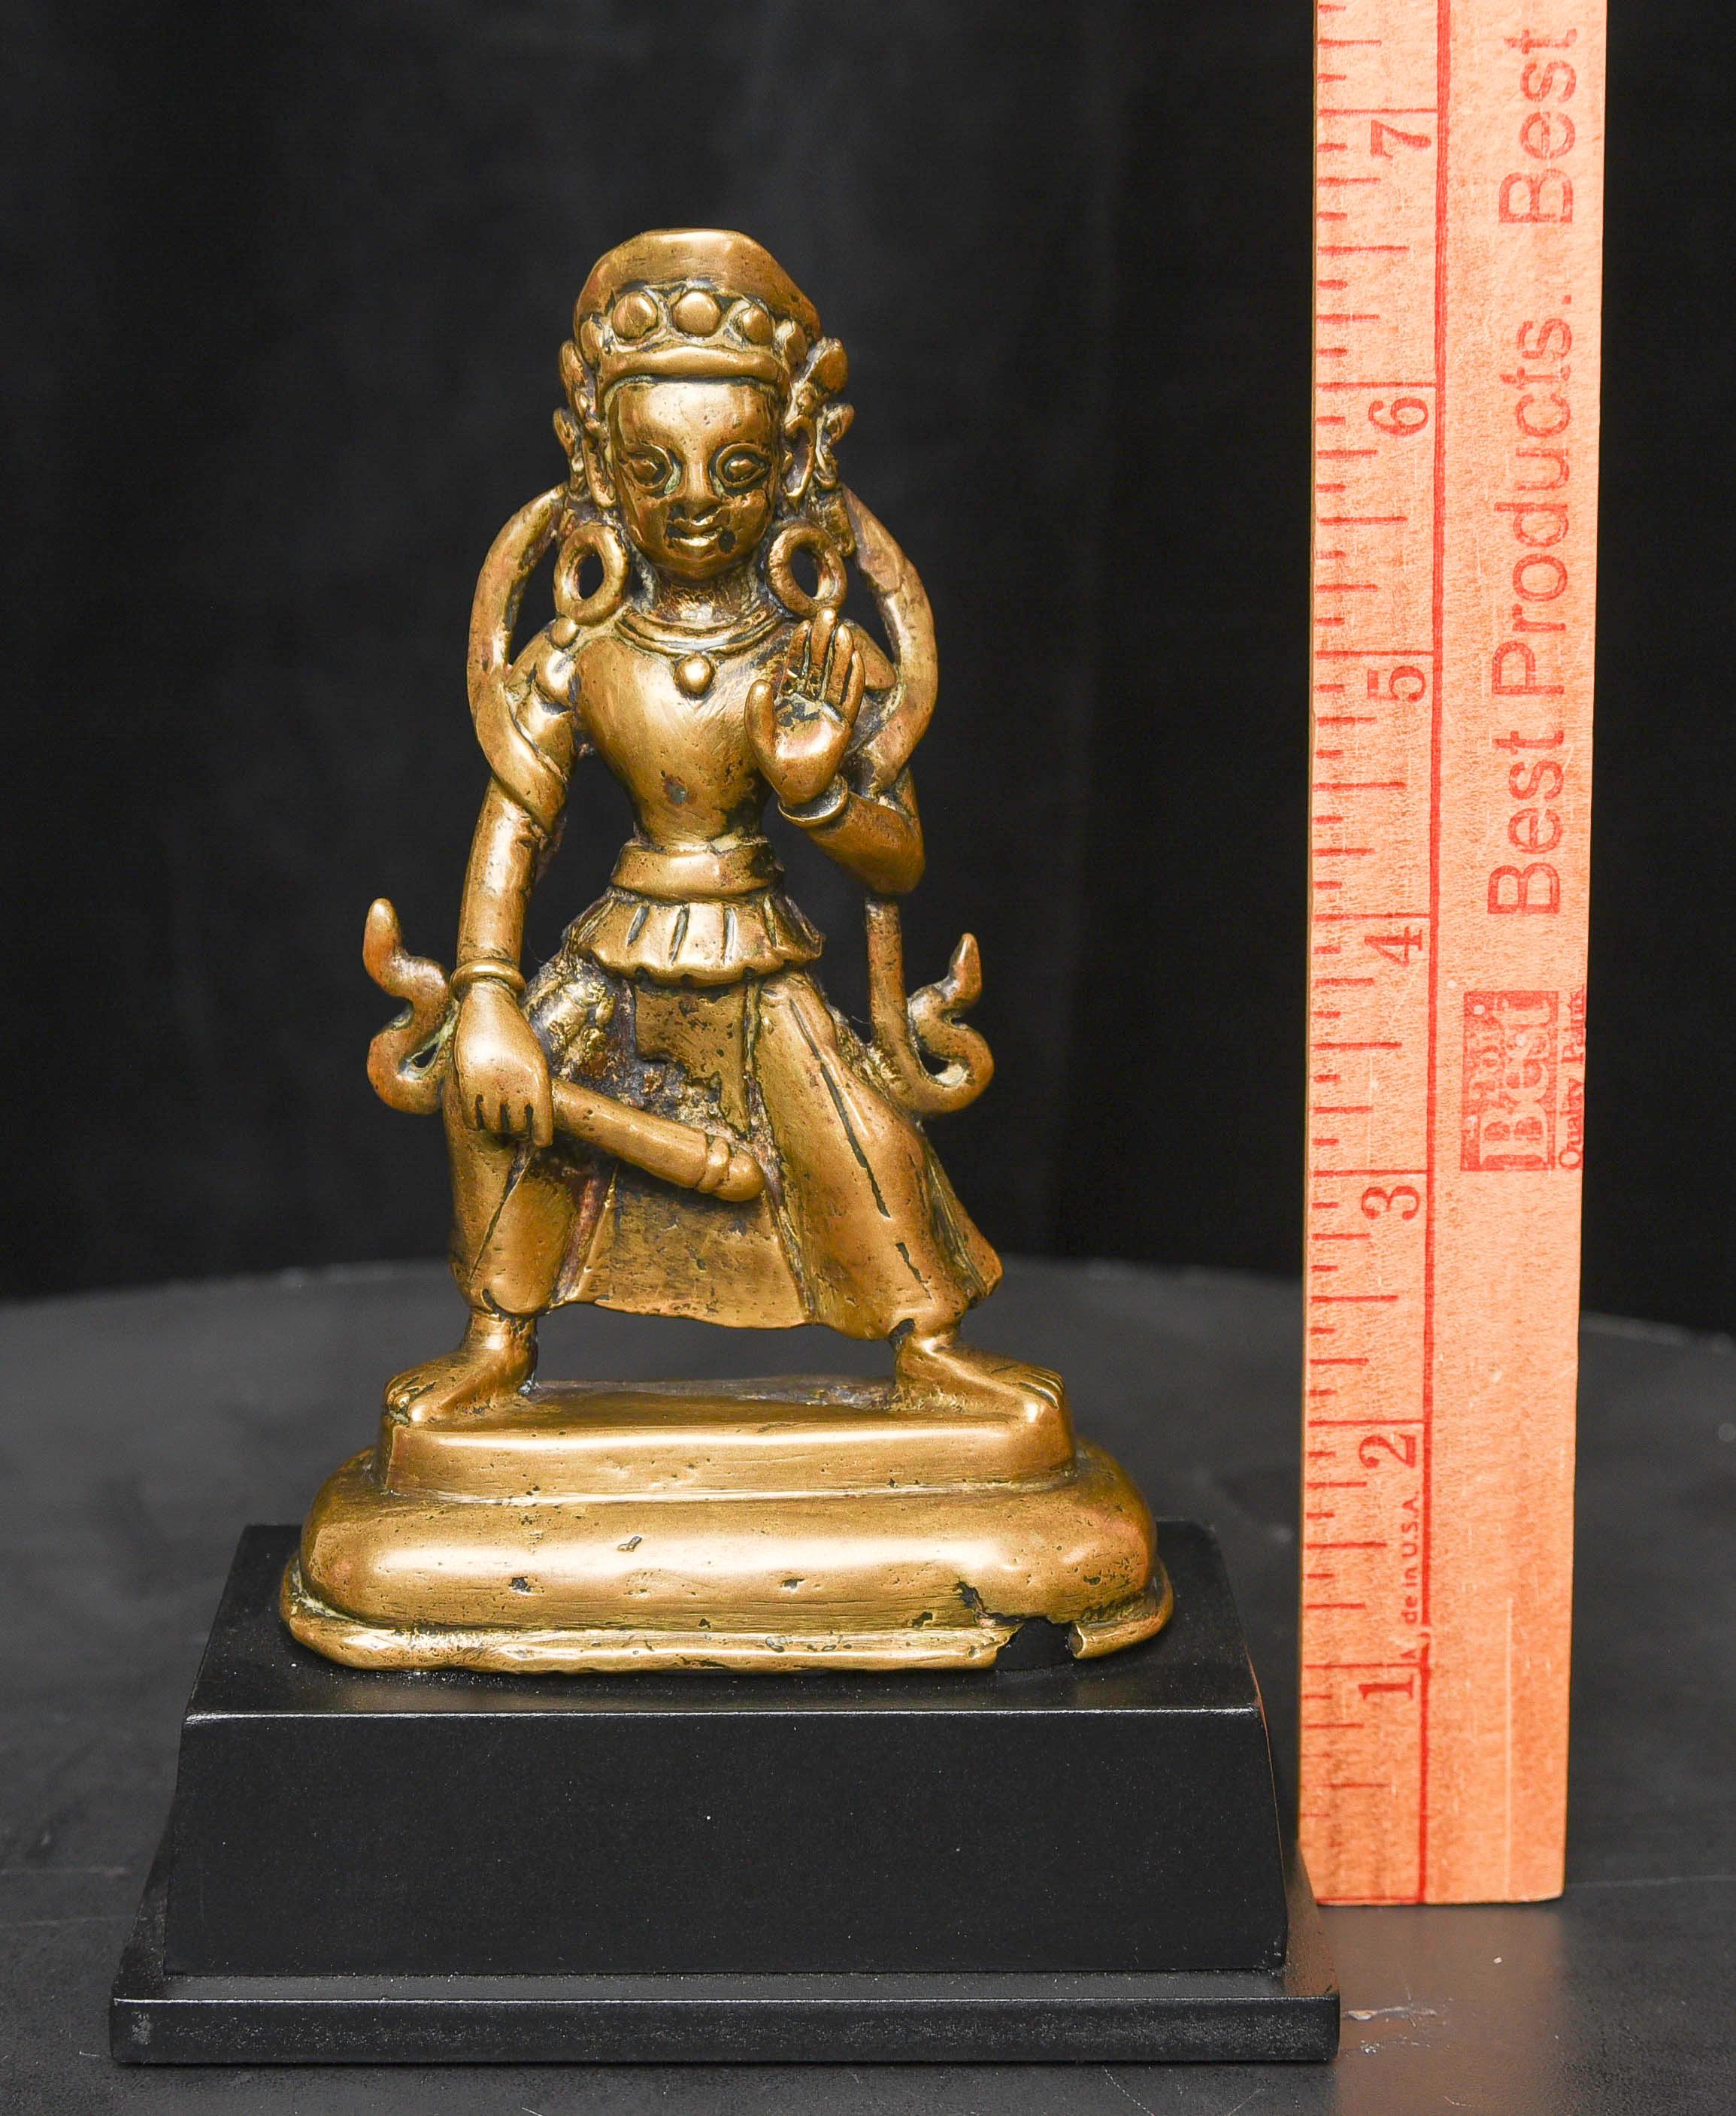 Tibetan Early Himalayan Bronze Deity - 9588 For Sale